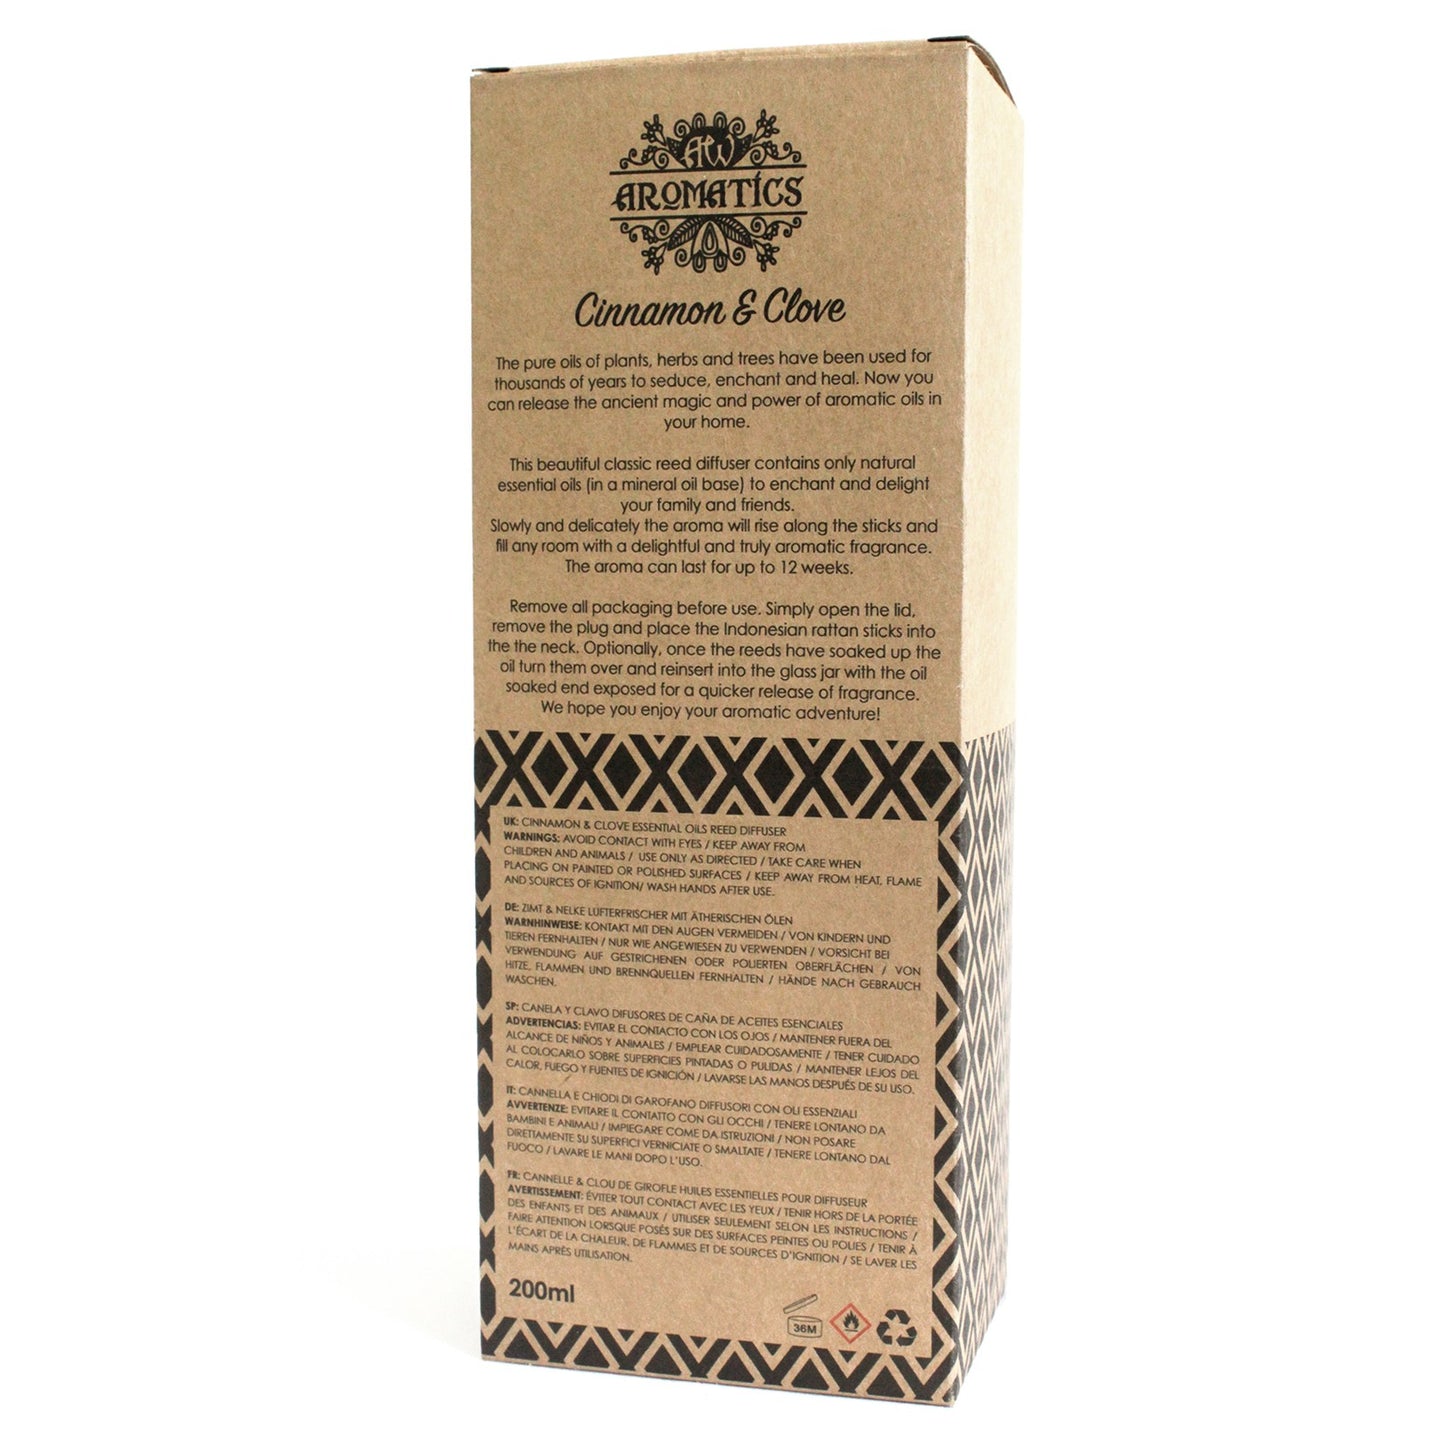 Cinnamon & Clove Essential Oil Reed Diffuser - 200ml